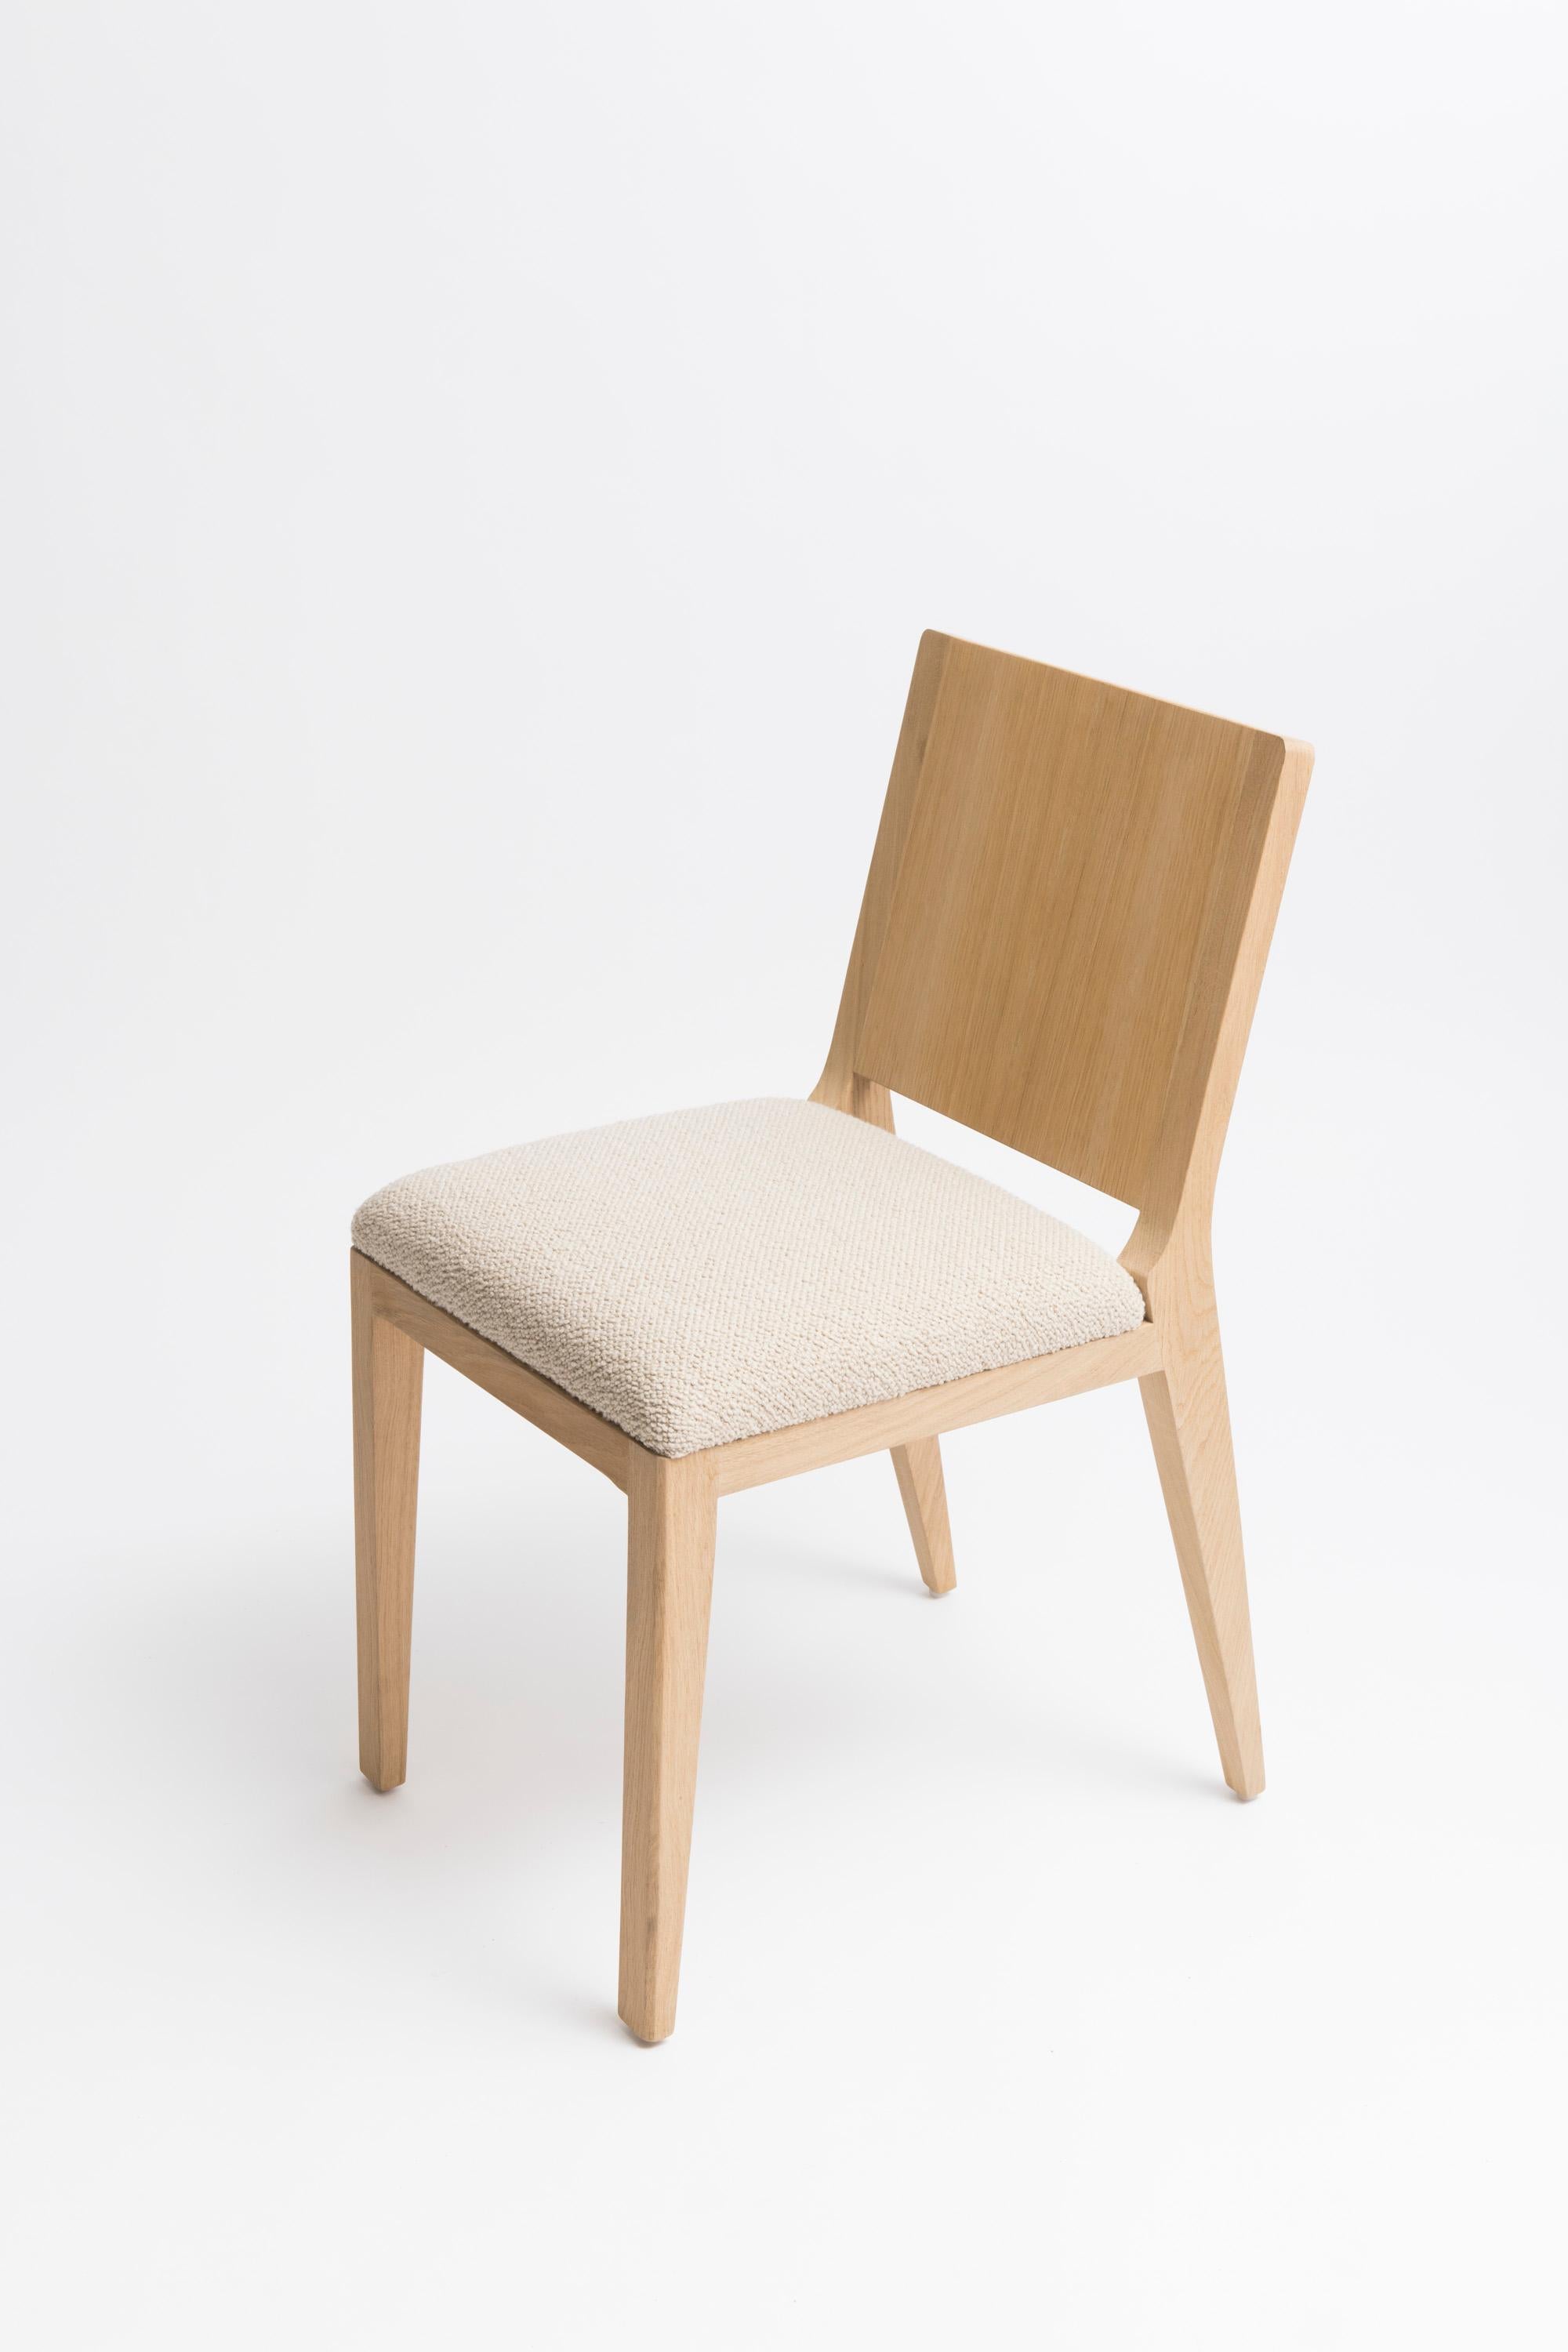 Black Ash Minimal Chair - om5.0 by mjiila For Sale 6